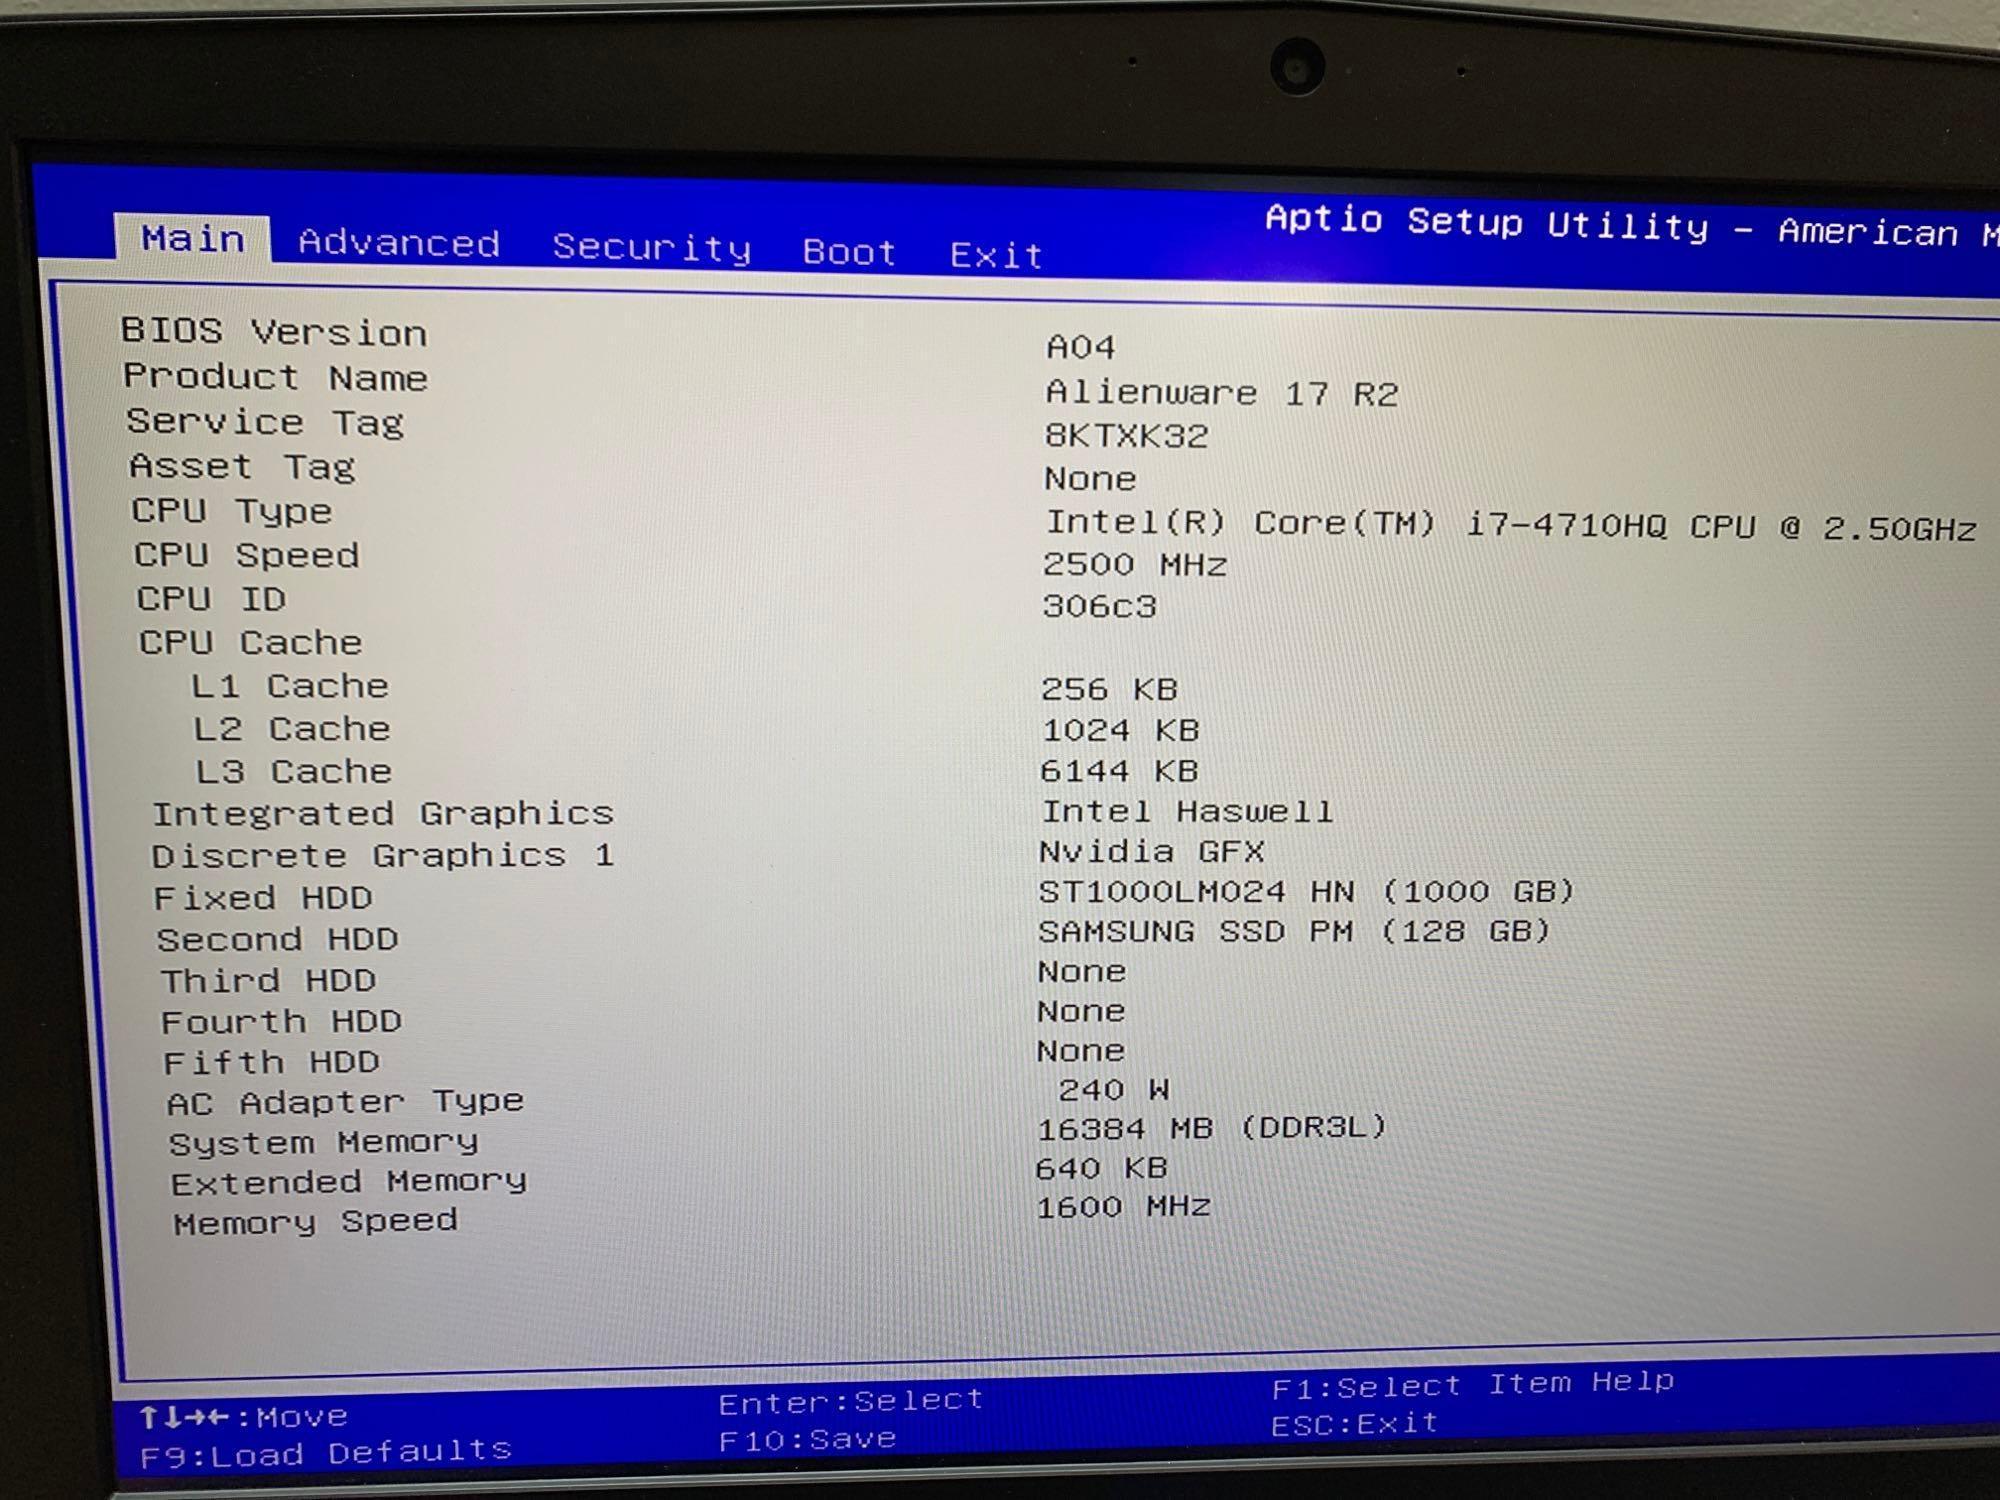 Dell Alienware 17 R2 Intel i7-4710 2.5GHz 16GB 1TB HD & 128GB SSD Wifi Bt HDMI nVidia 4GB Win 10